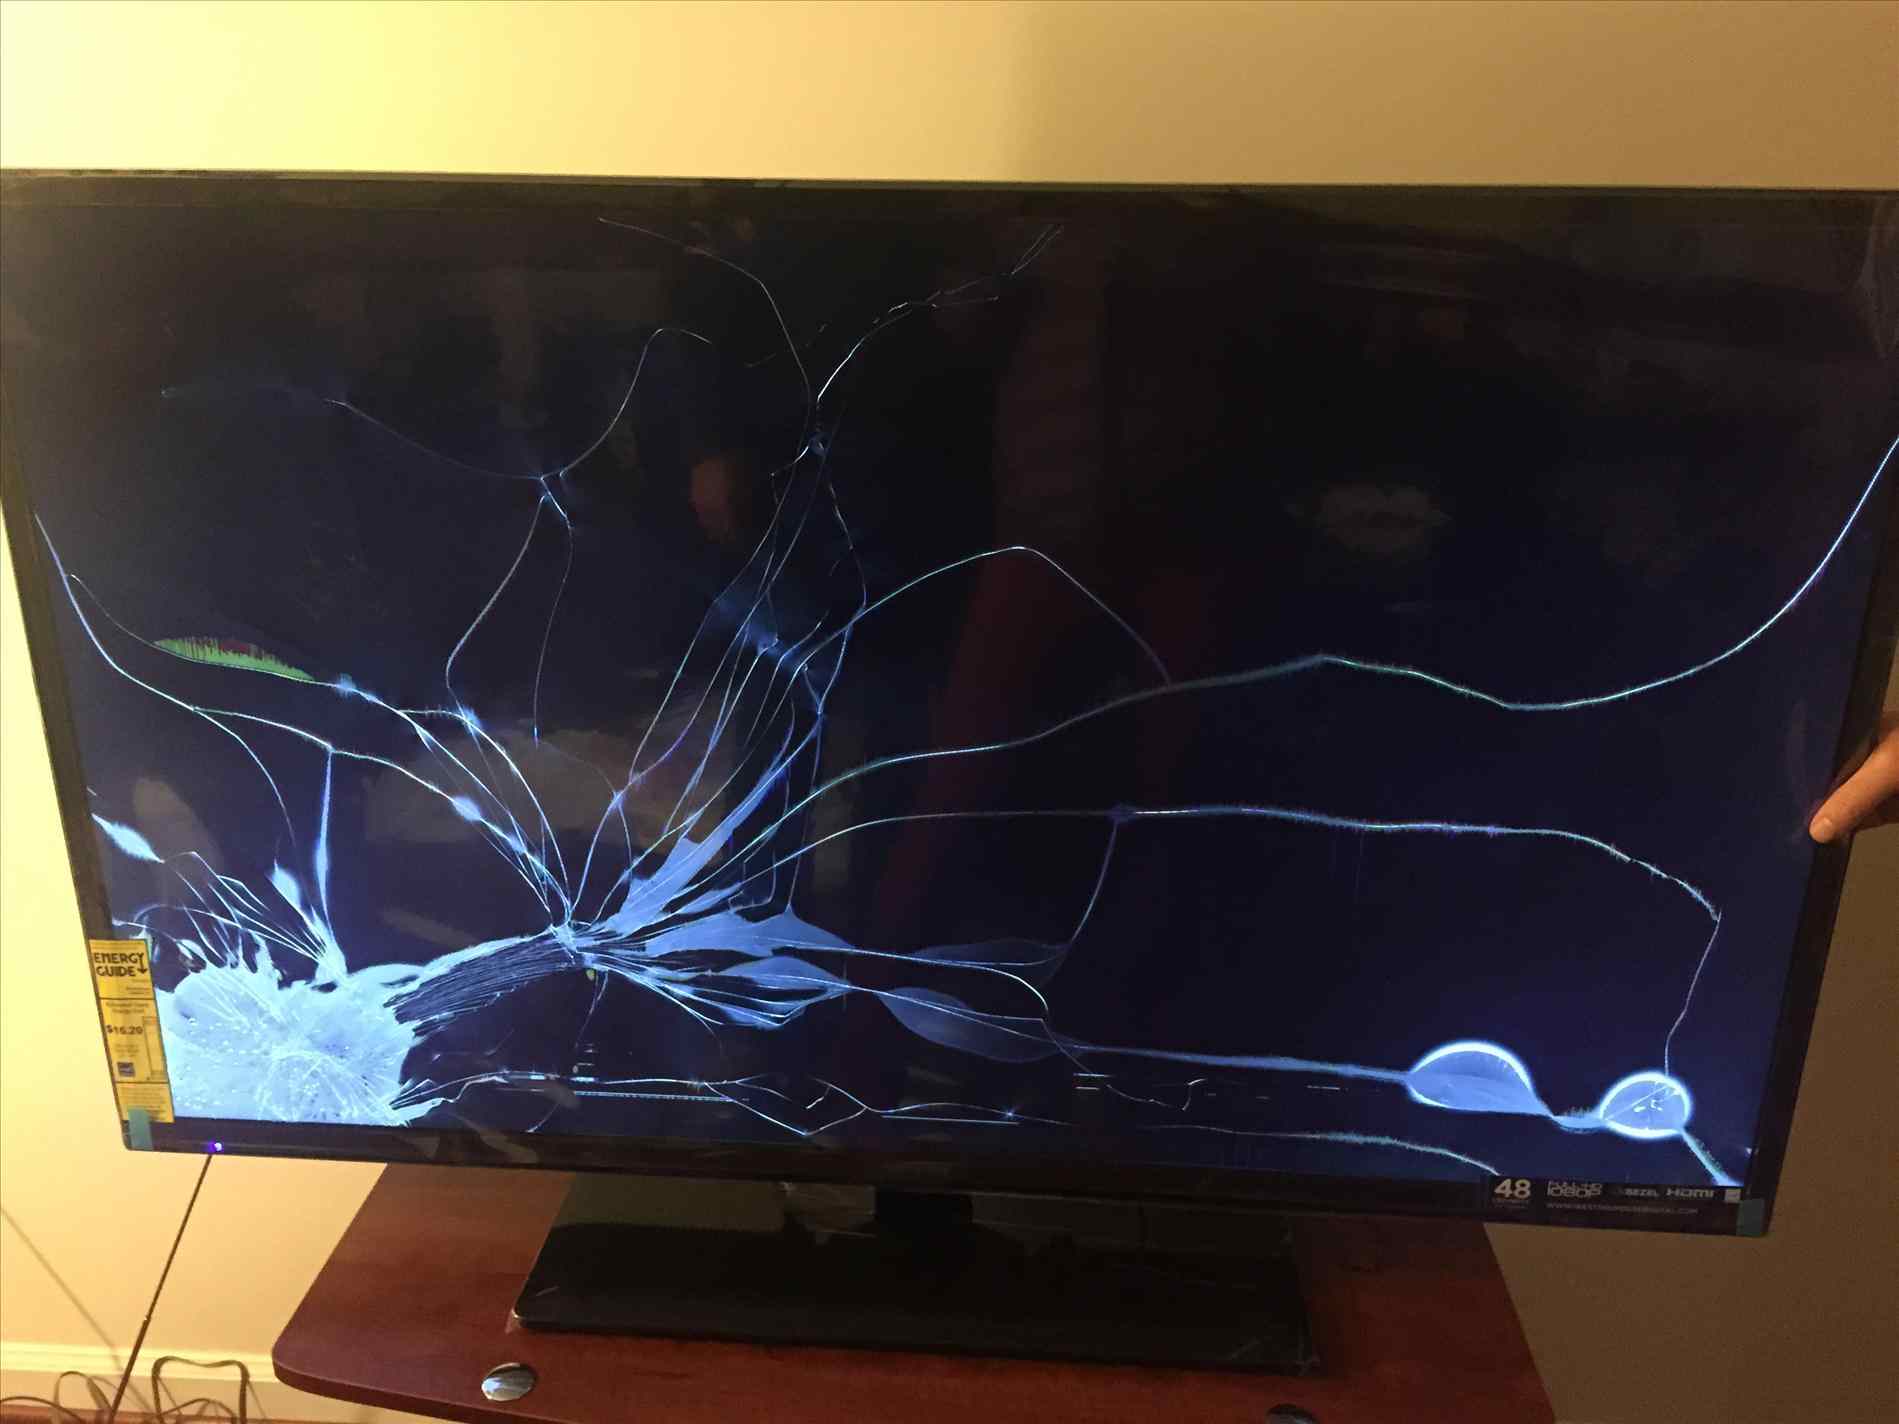 Aquos Lcd Youtube Destroying Crack In Lcd Tv Screen - Broken Big Screen Tv - HD Wallpaper 